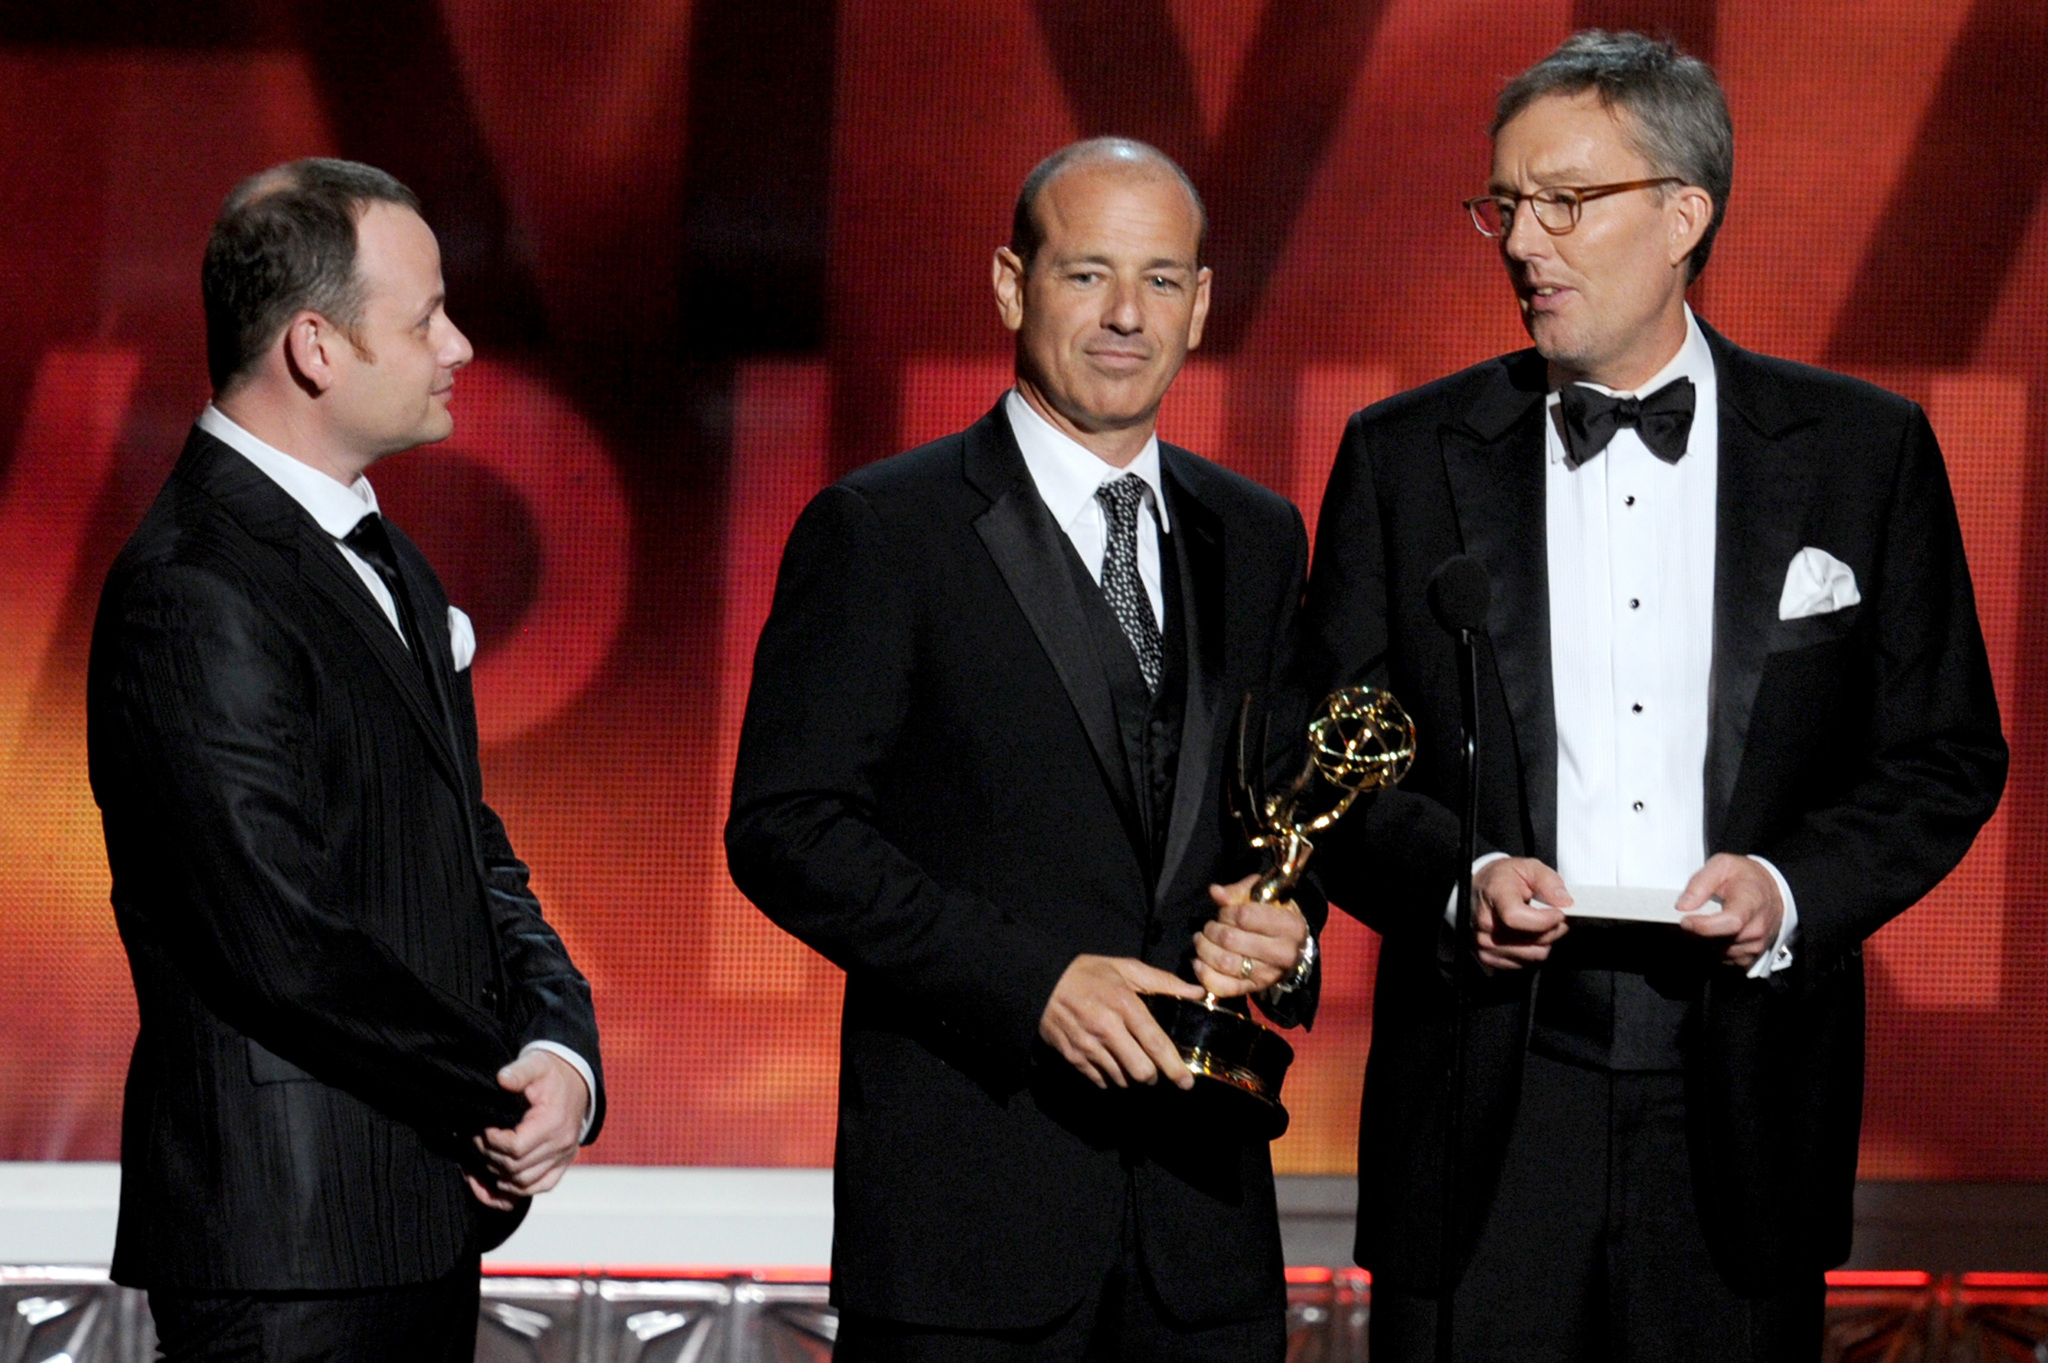 Alex Gansa, Howard Gordon and Gideon Raff at event of The 64th Primetime Emmy Awards (2012)